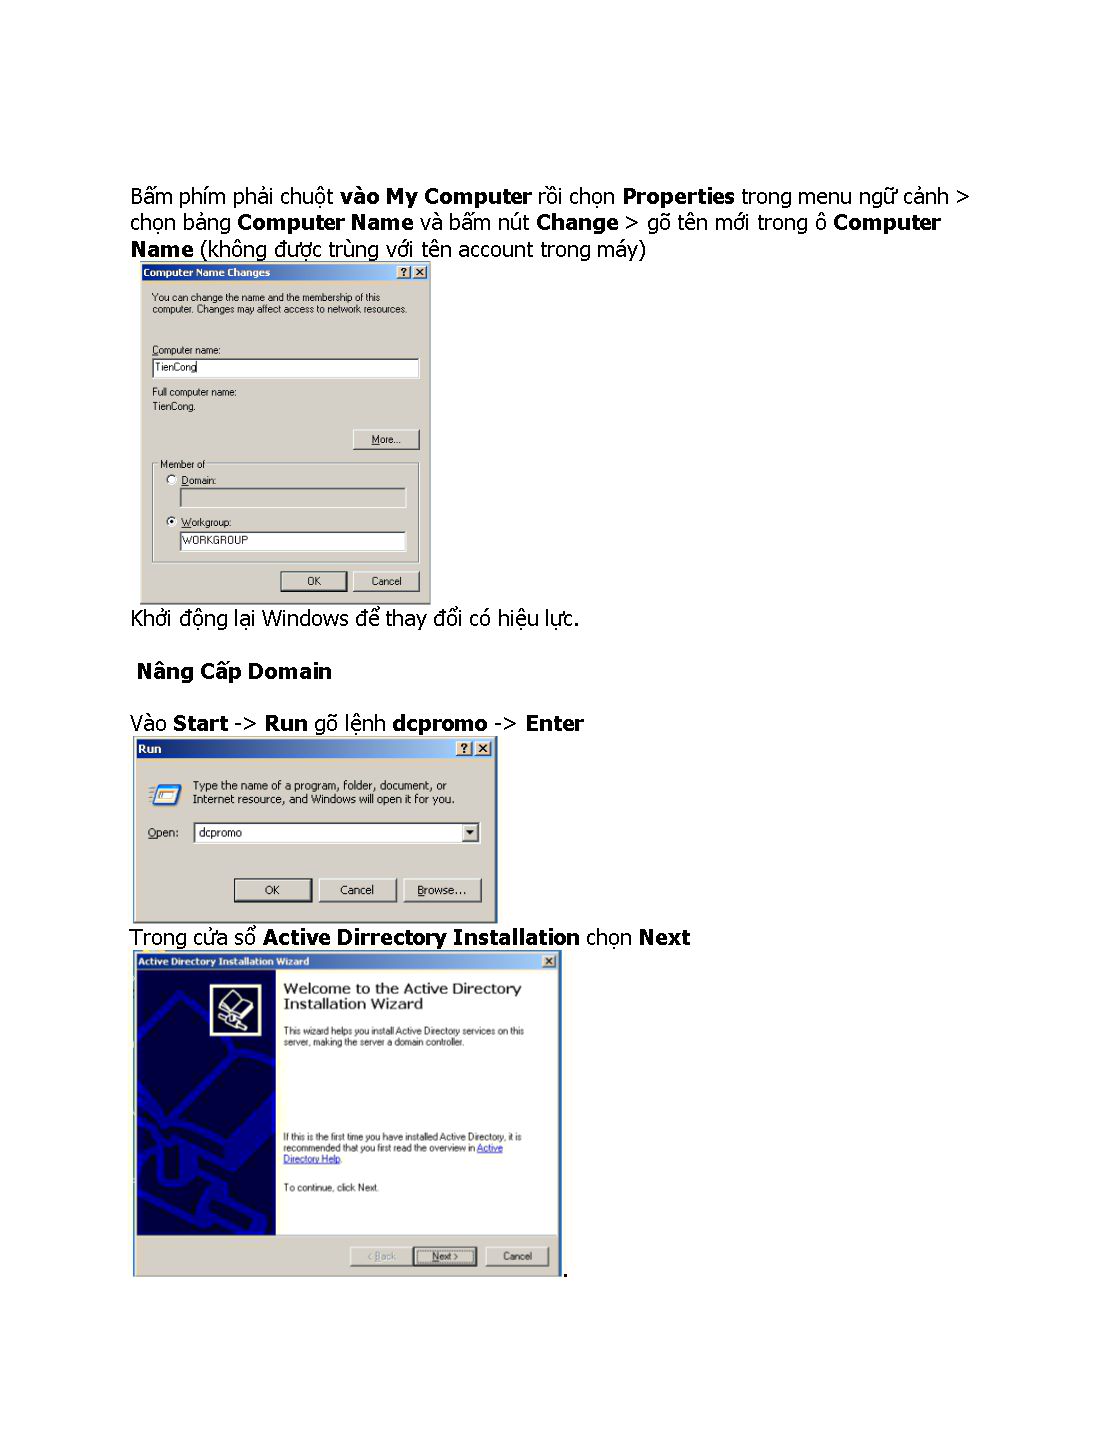 Đề tài Lap Windows server 2003 trang 2